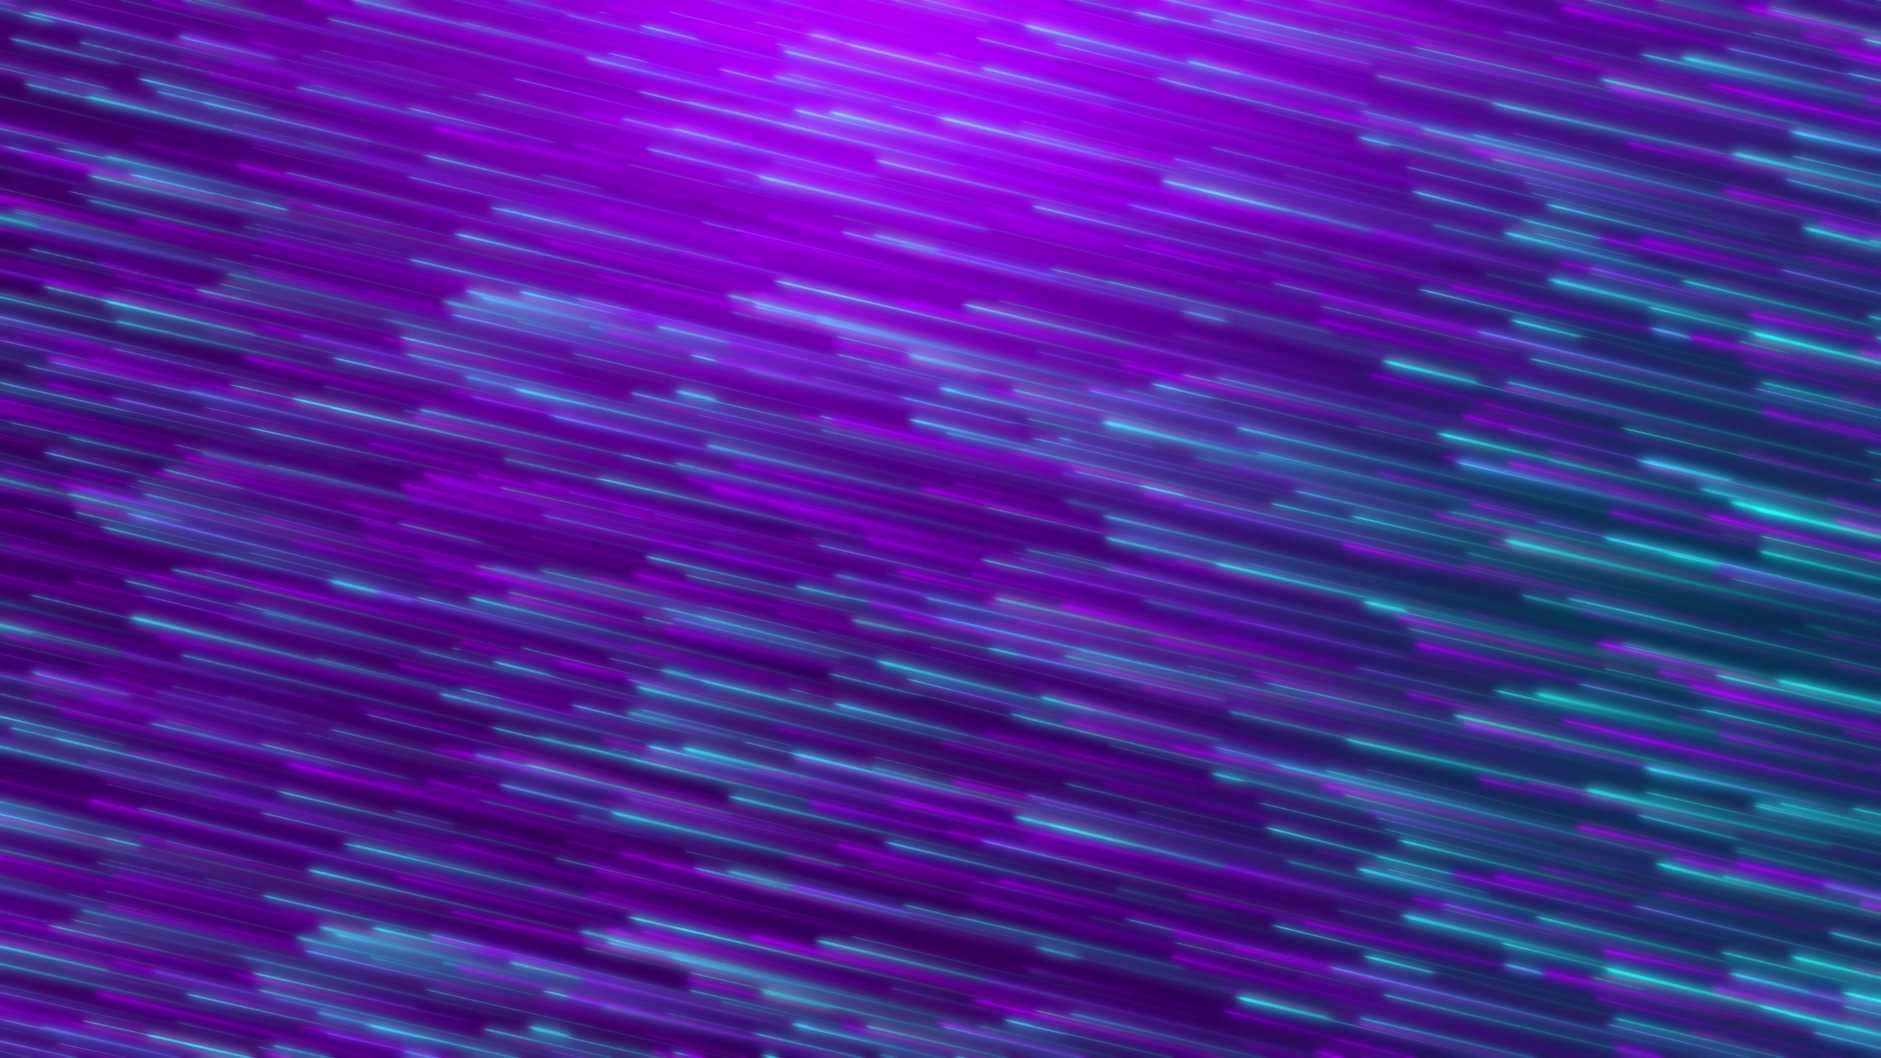 4K Purple & Cyan Lines Motion Background || VFX Free To Use 4K Screensaver